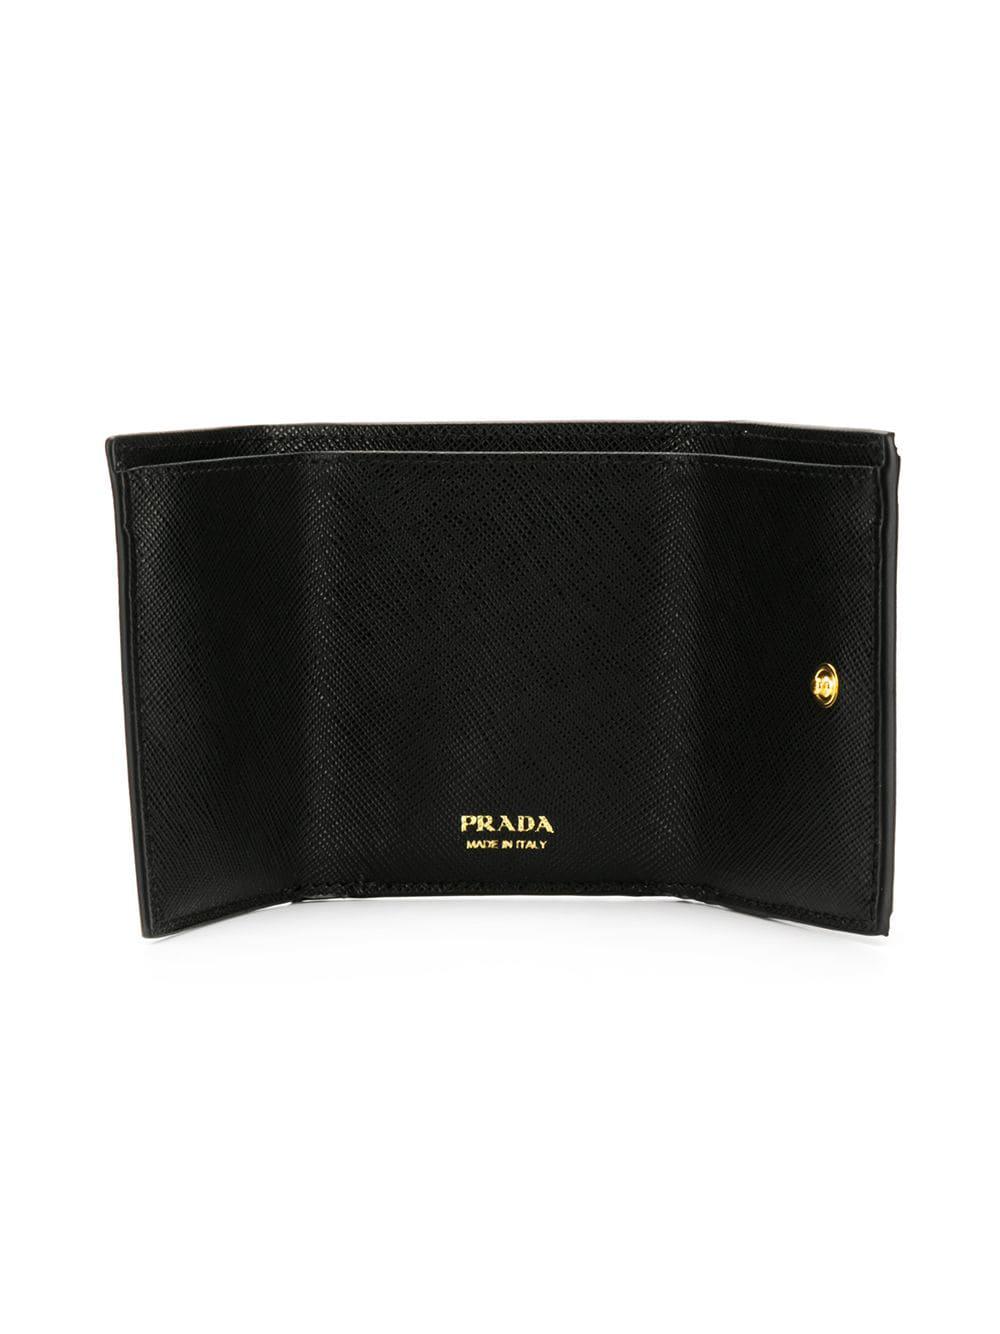 Prada Saffiano Leather Small Wallet in Black - Lyst